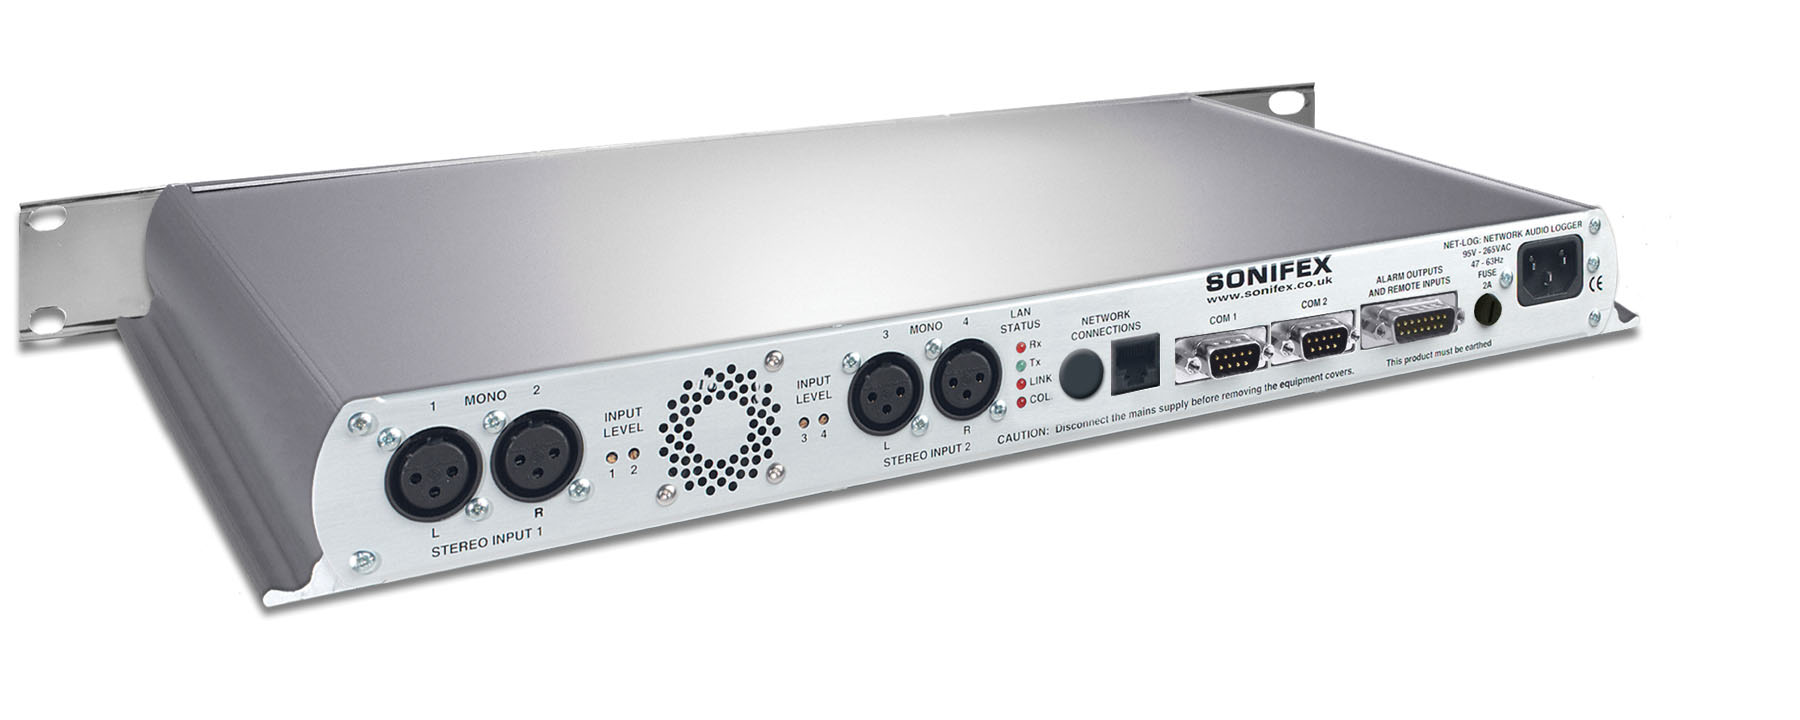 Control channel. Tascam HS-20. Sonifex cm-cu21 комментаторский блок. Nr-700nt. Sonifex Audio Control.